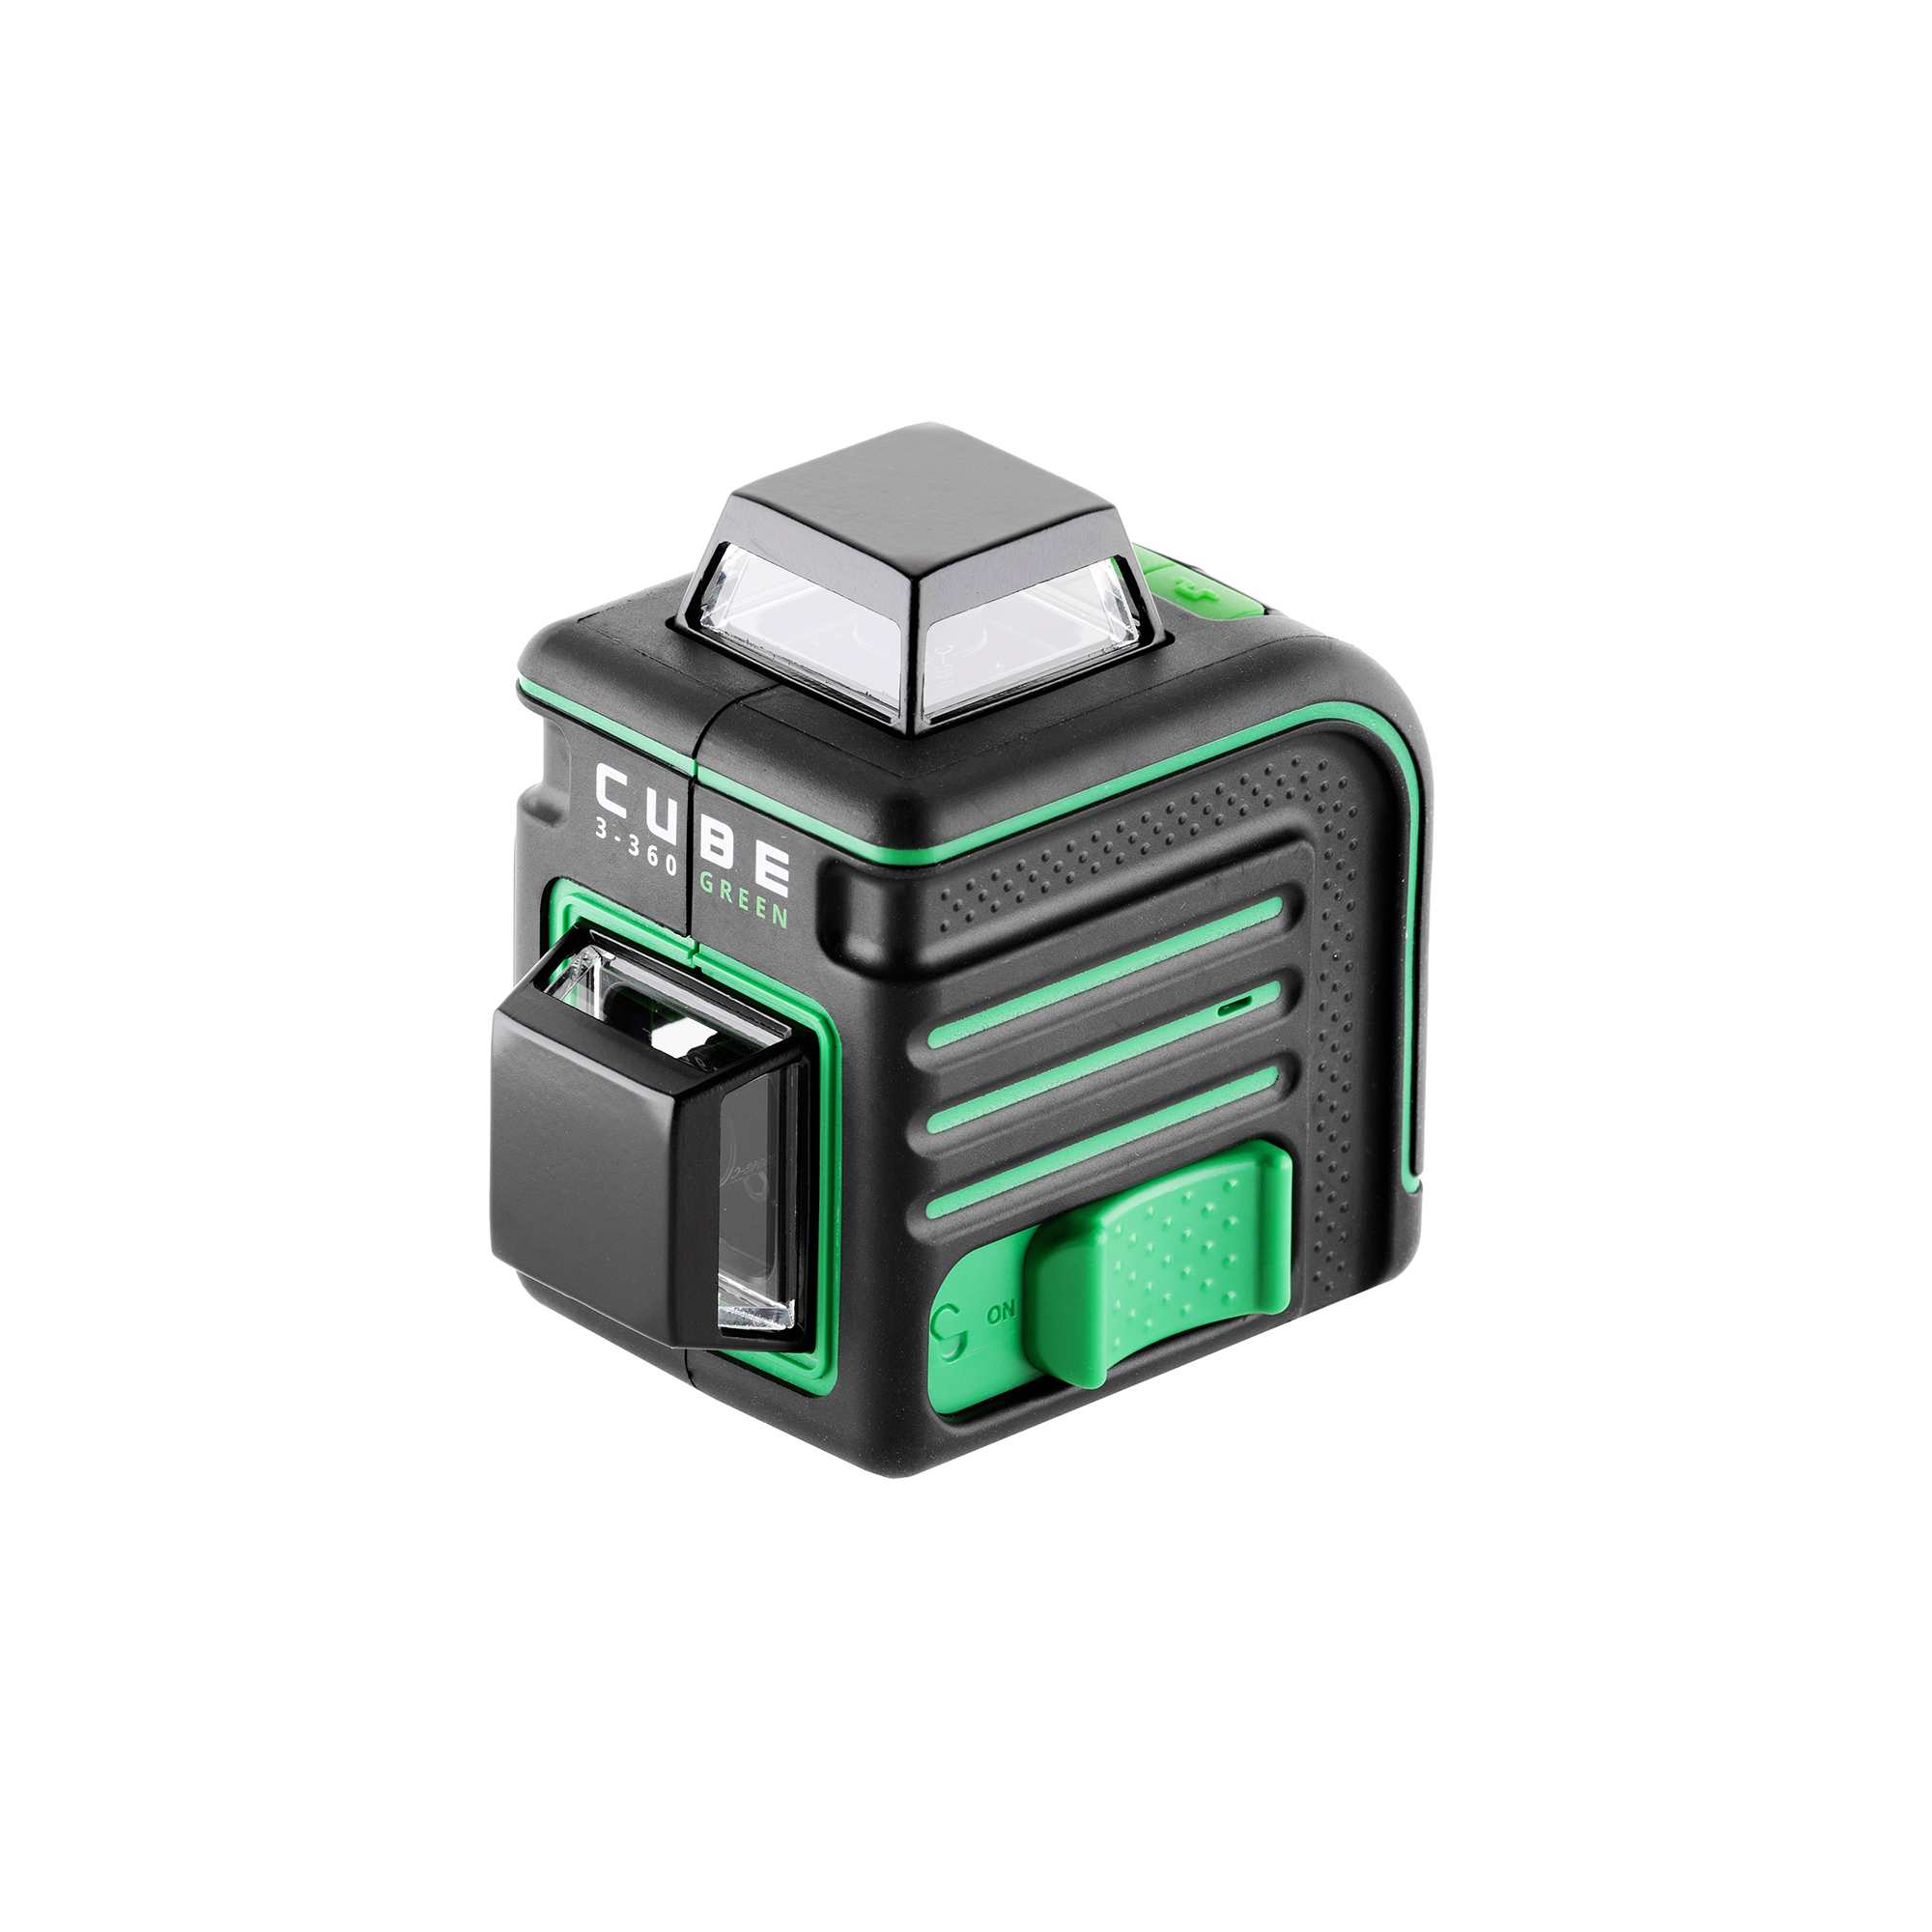 Ada instruments cube. Лазерный уровень ada Cube 3-360 Green. Лазерный уровень ada Cube 3-360 Green Basic Edition а00560. Лазерный уровень ada Cube 3-360 Green Home Edition а00566. Ada Cube 3-360 Green Ultimate Edition.